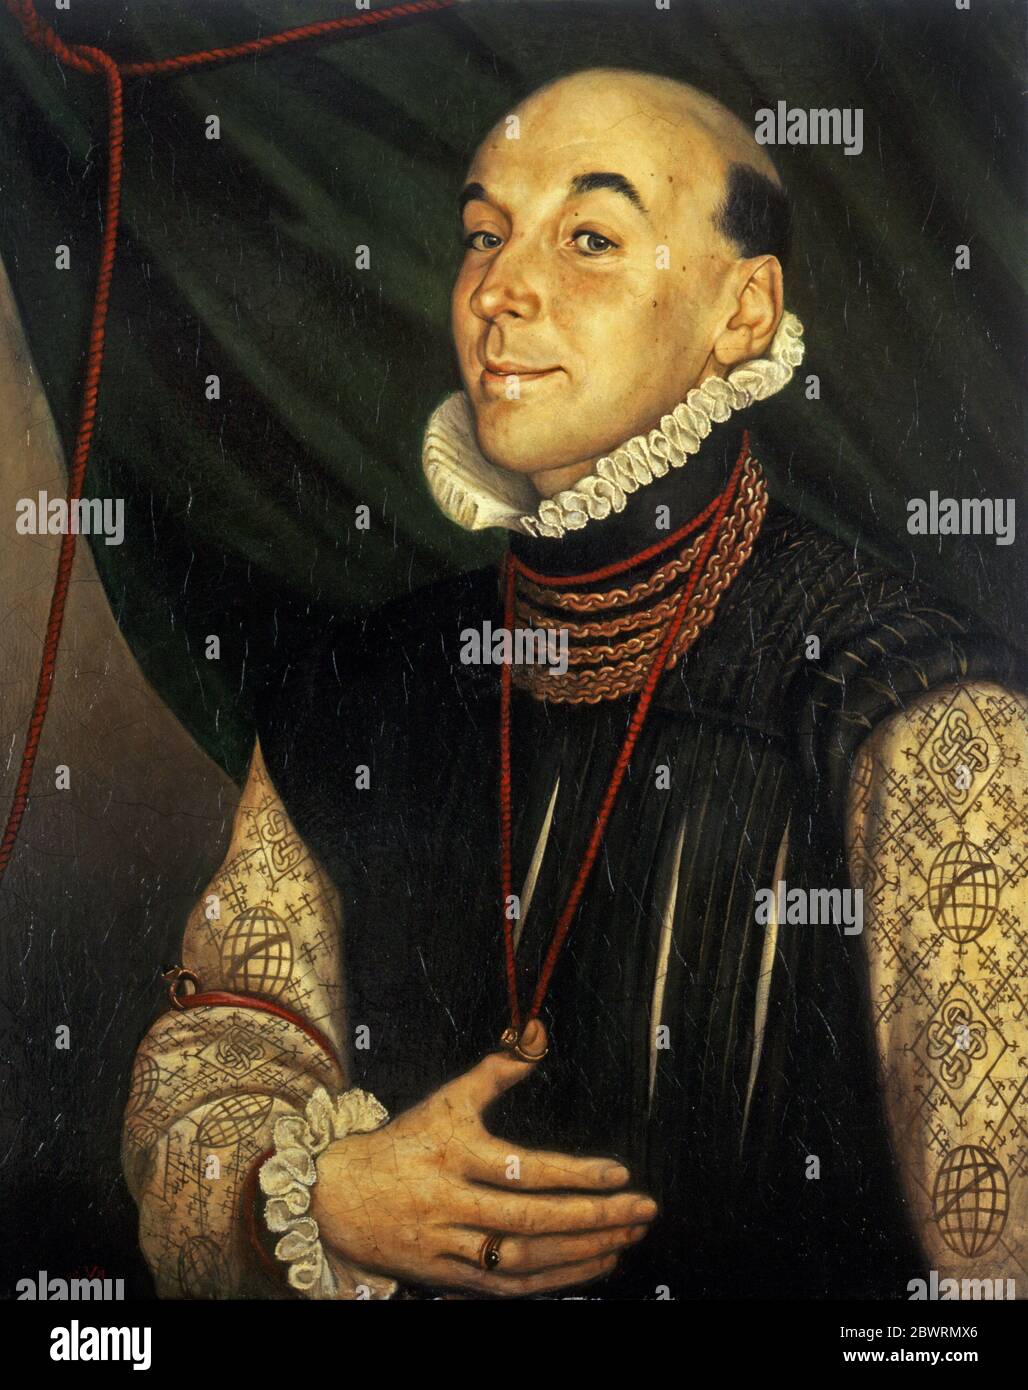 Renaissance style portrait on nobleman by Bob Venables Stock Photo